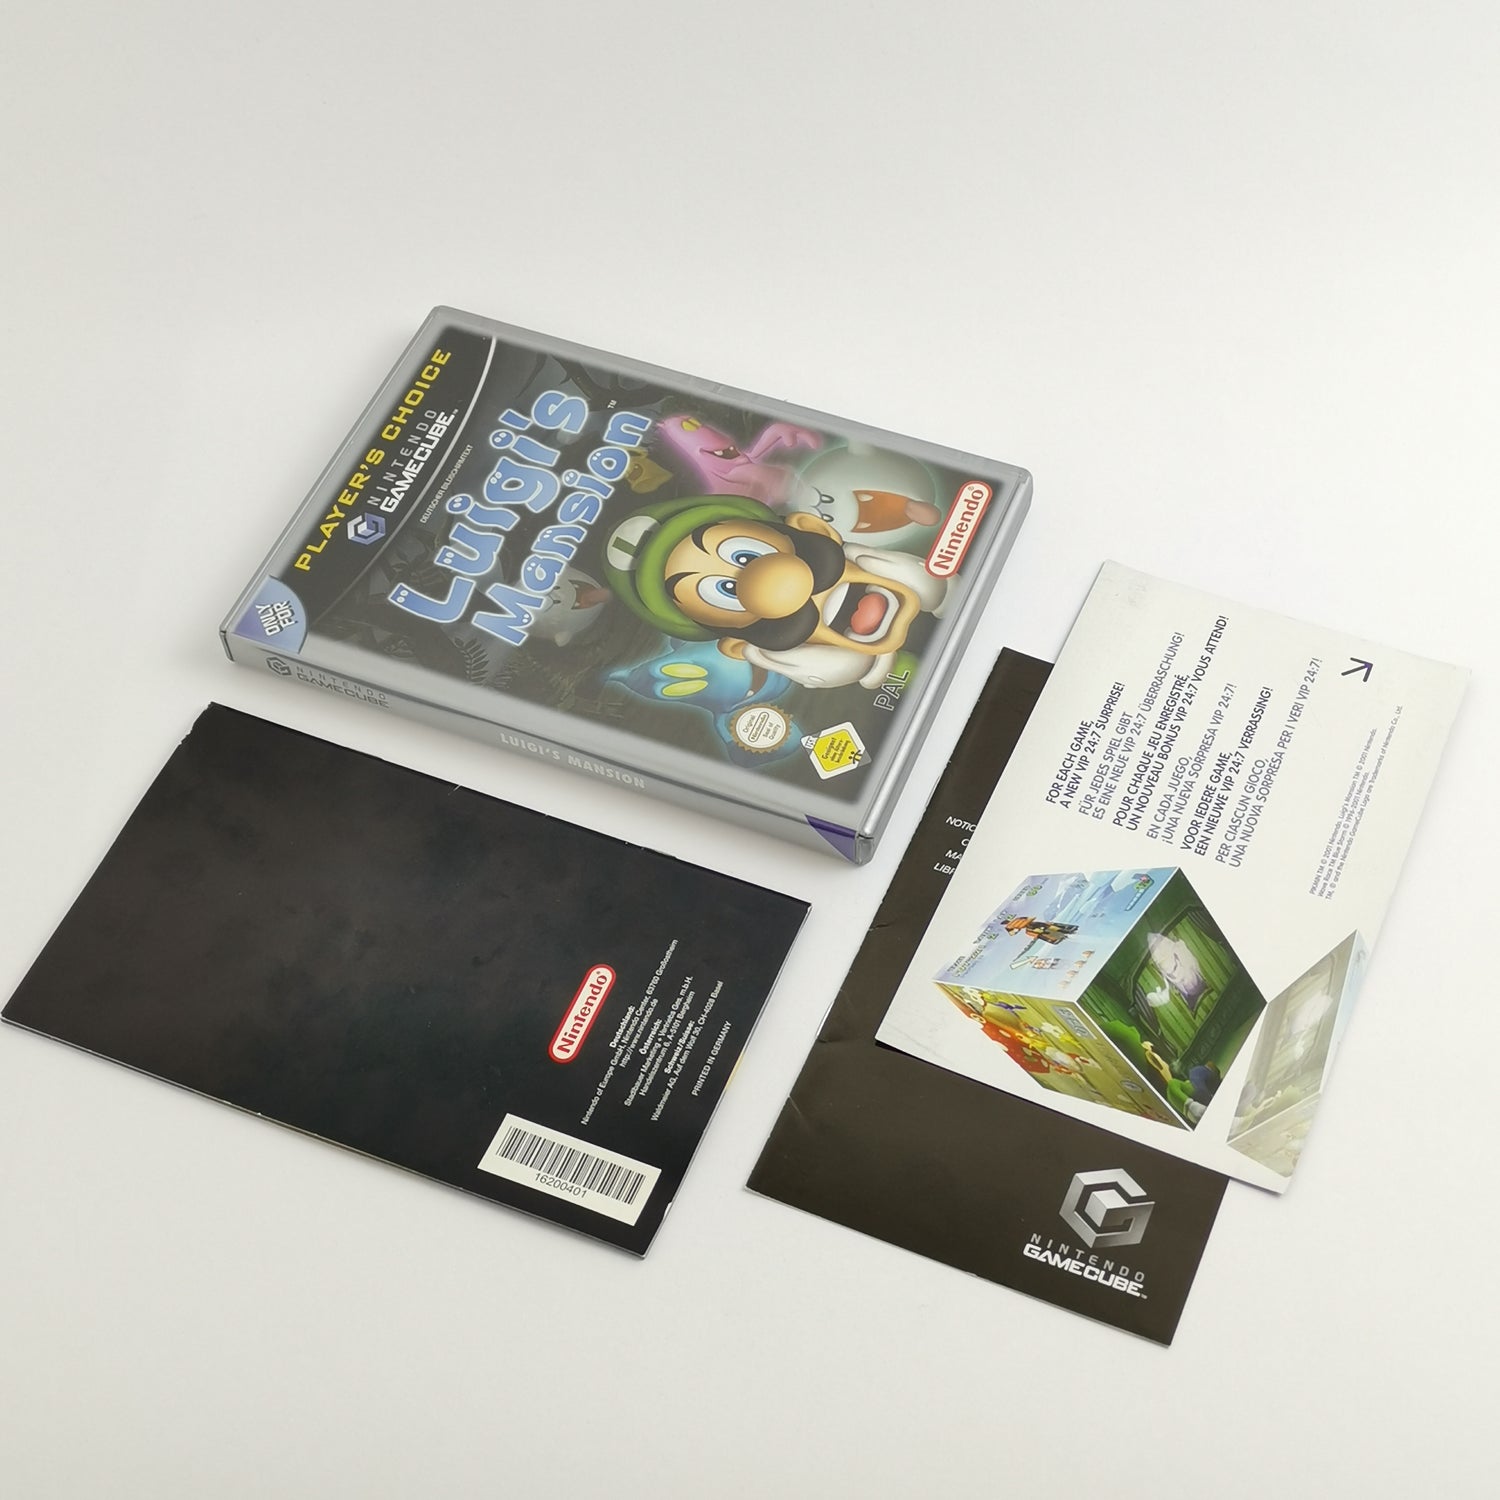 Nintendo Gamecube game: Luigi's Mansion Player's Choice - OVP instructions PAL